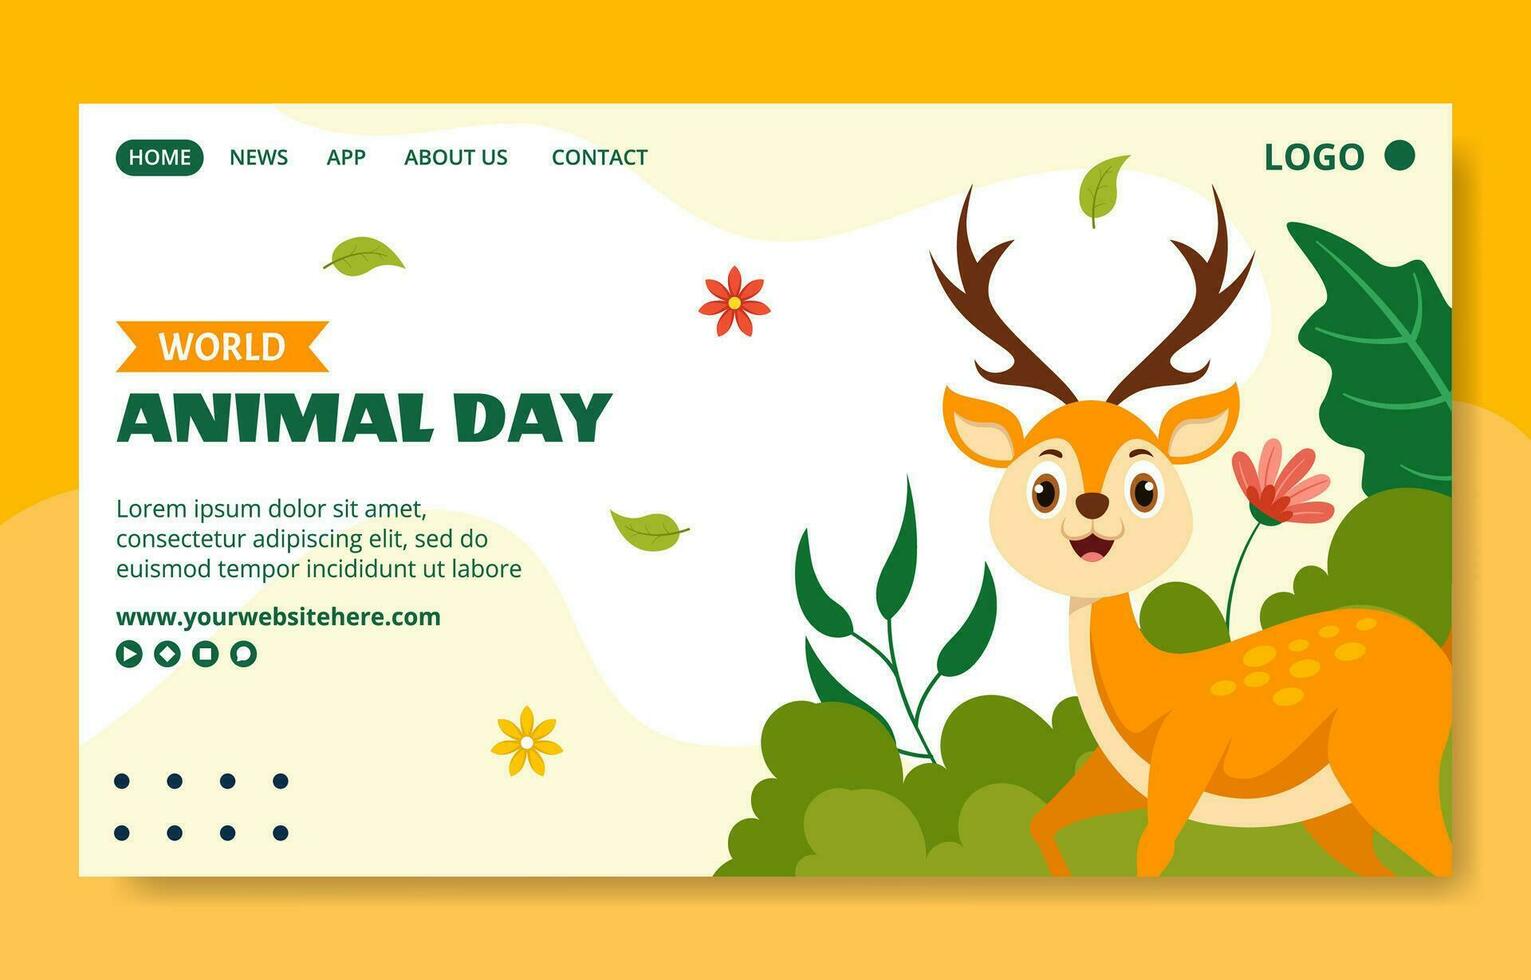 World Animal Day Social Media Landing Page Cartoon Hand Drawn Templates Background Illustration vector